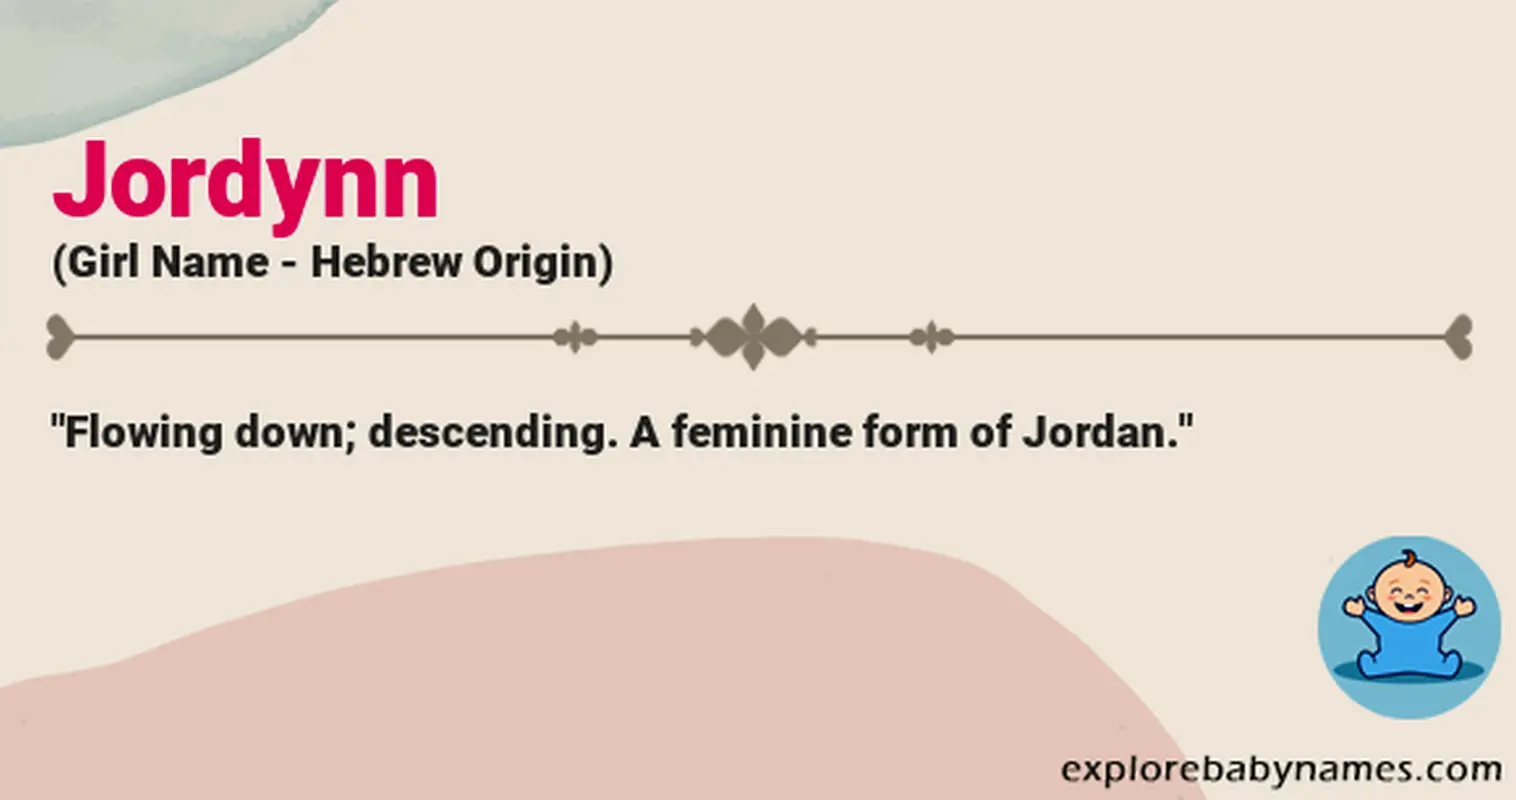 Meaning of Jordynn